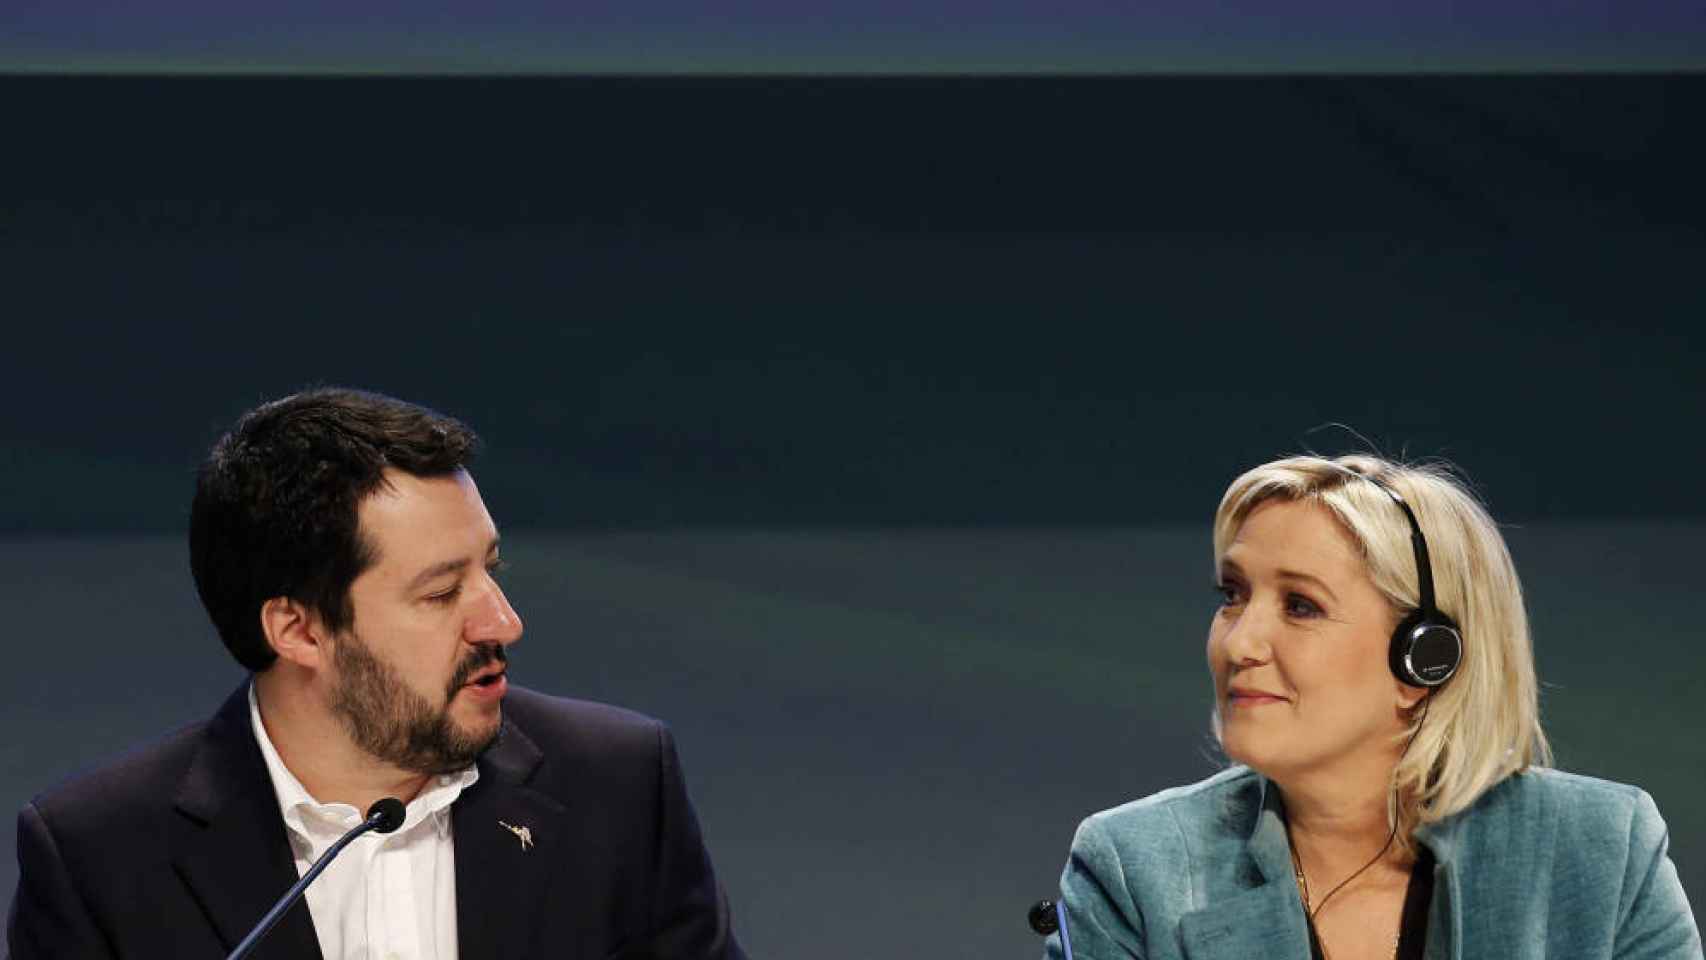 Matteo Salvini y Marine Le Pen. Imagen de archivo.